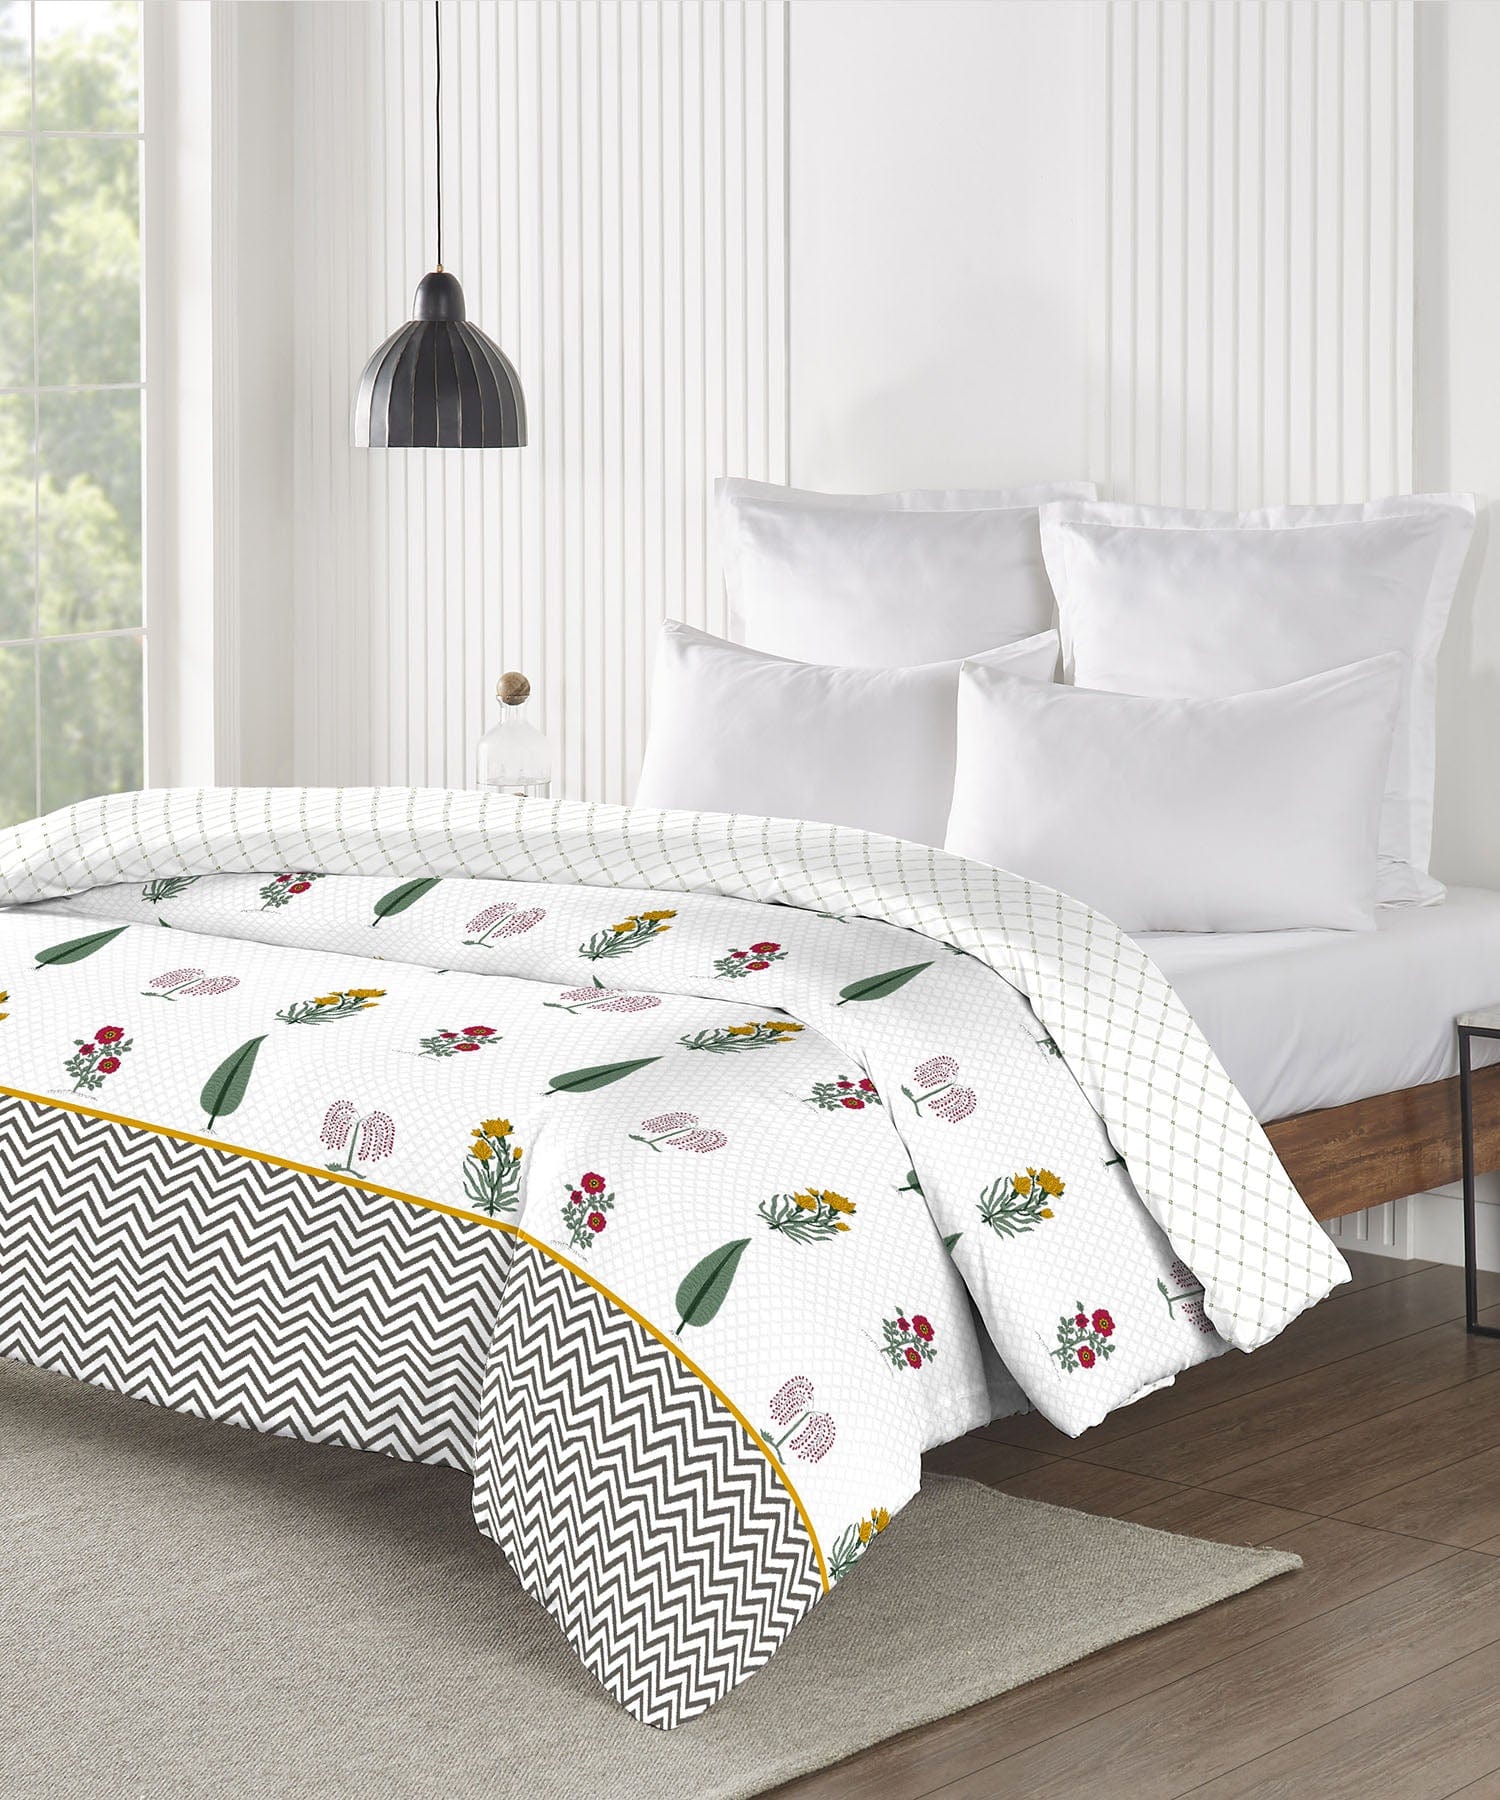 King Size Comforter ₹3999/-